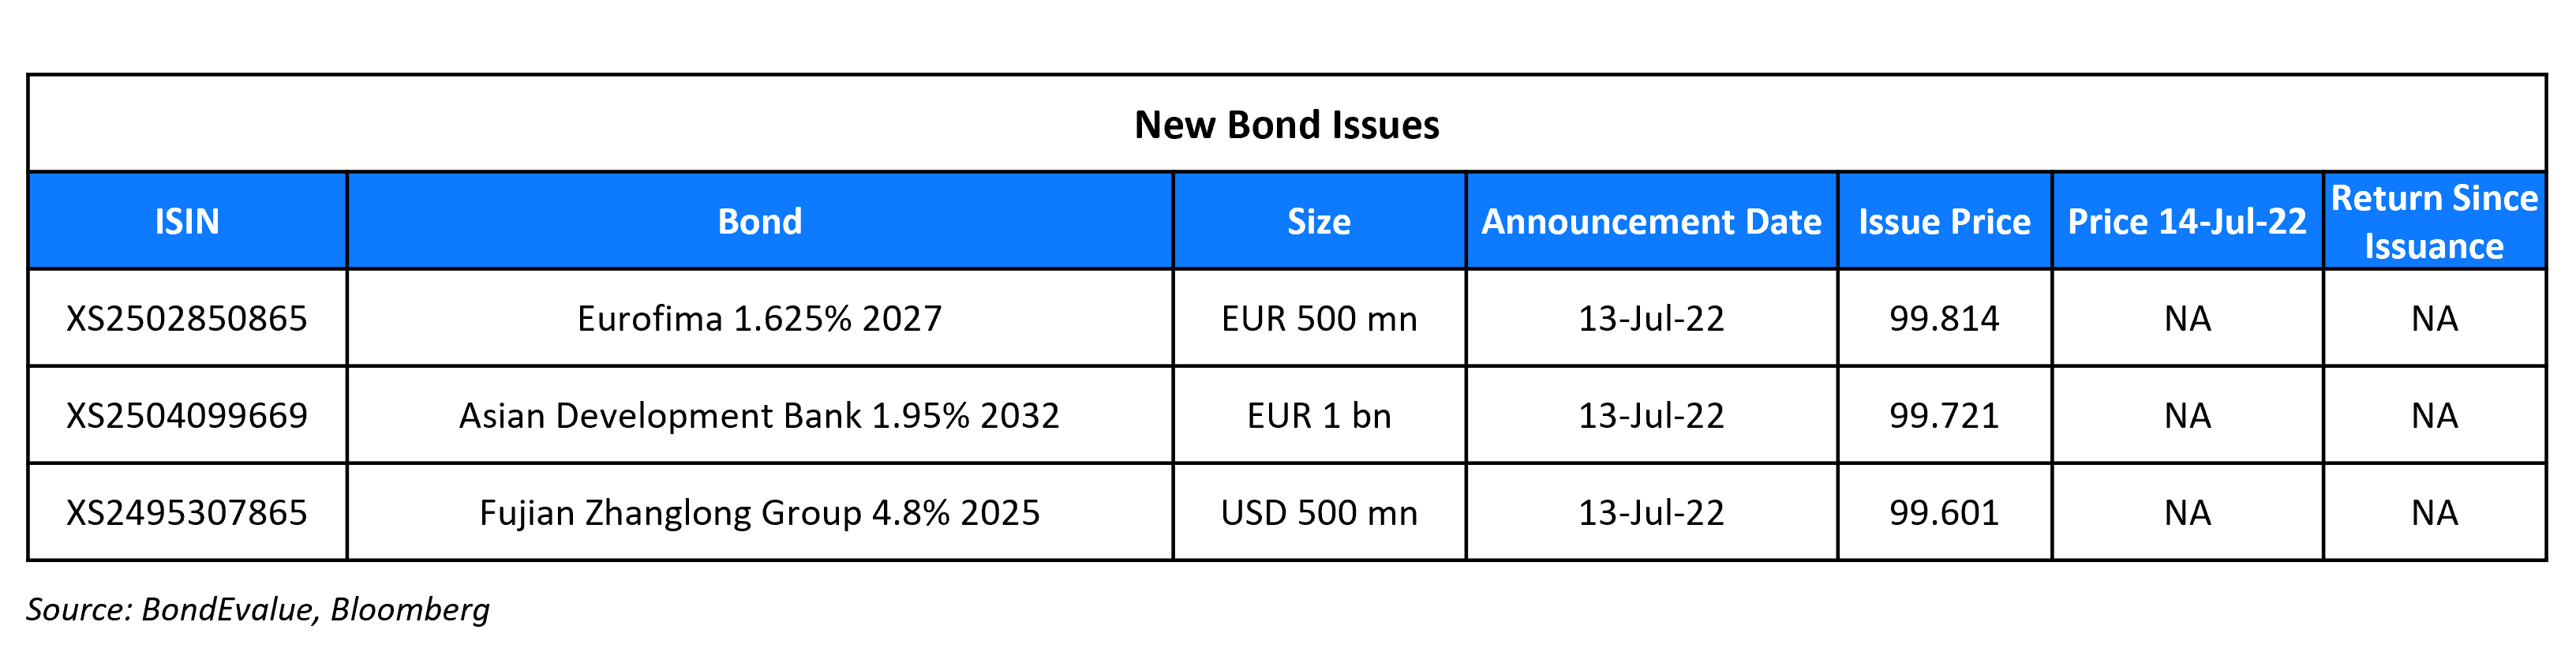 New Bond Issues 14 Jul 22